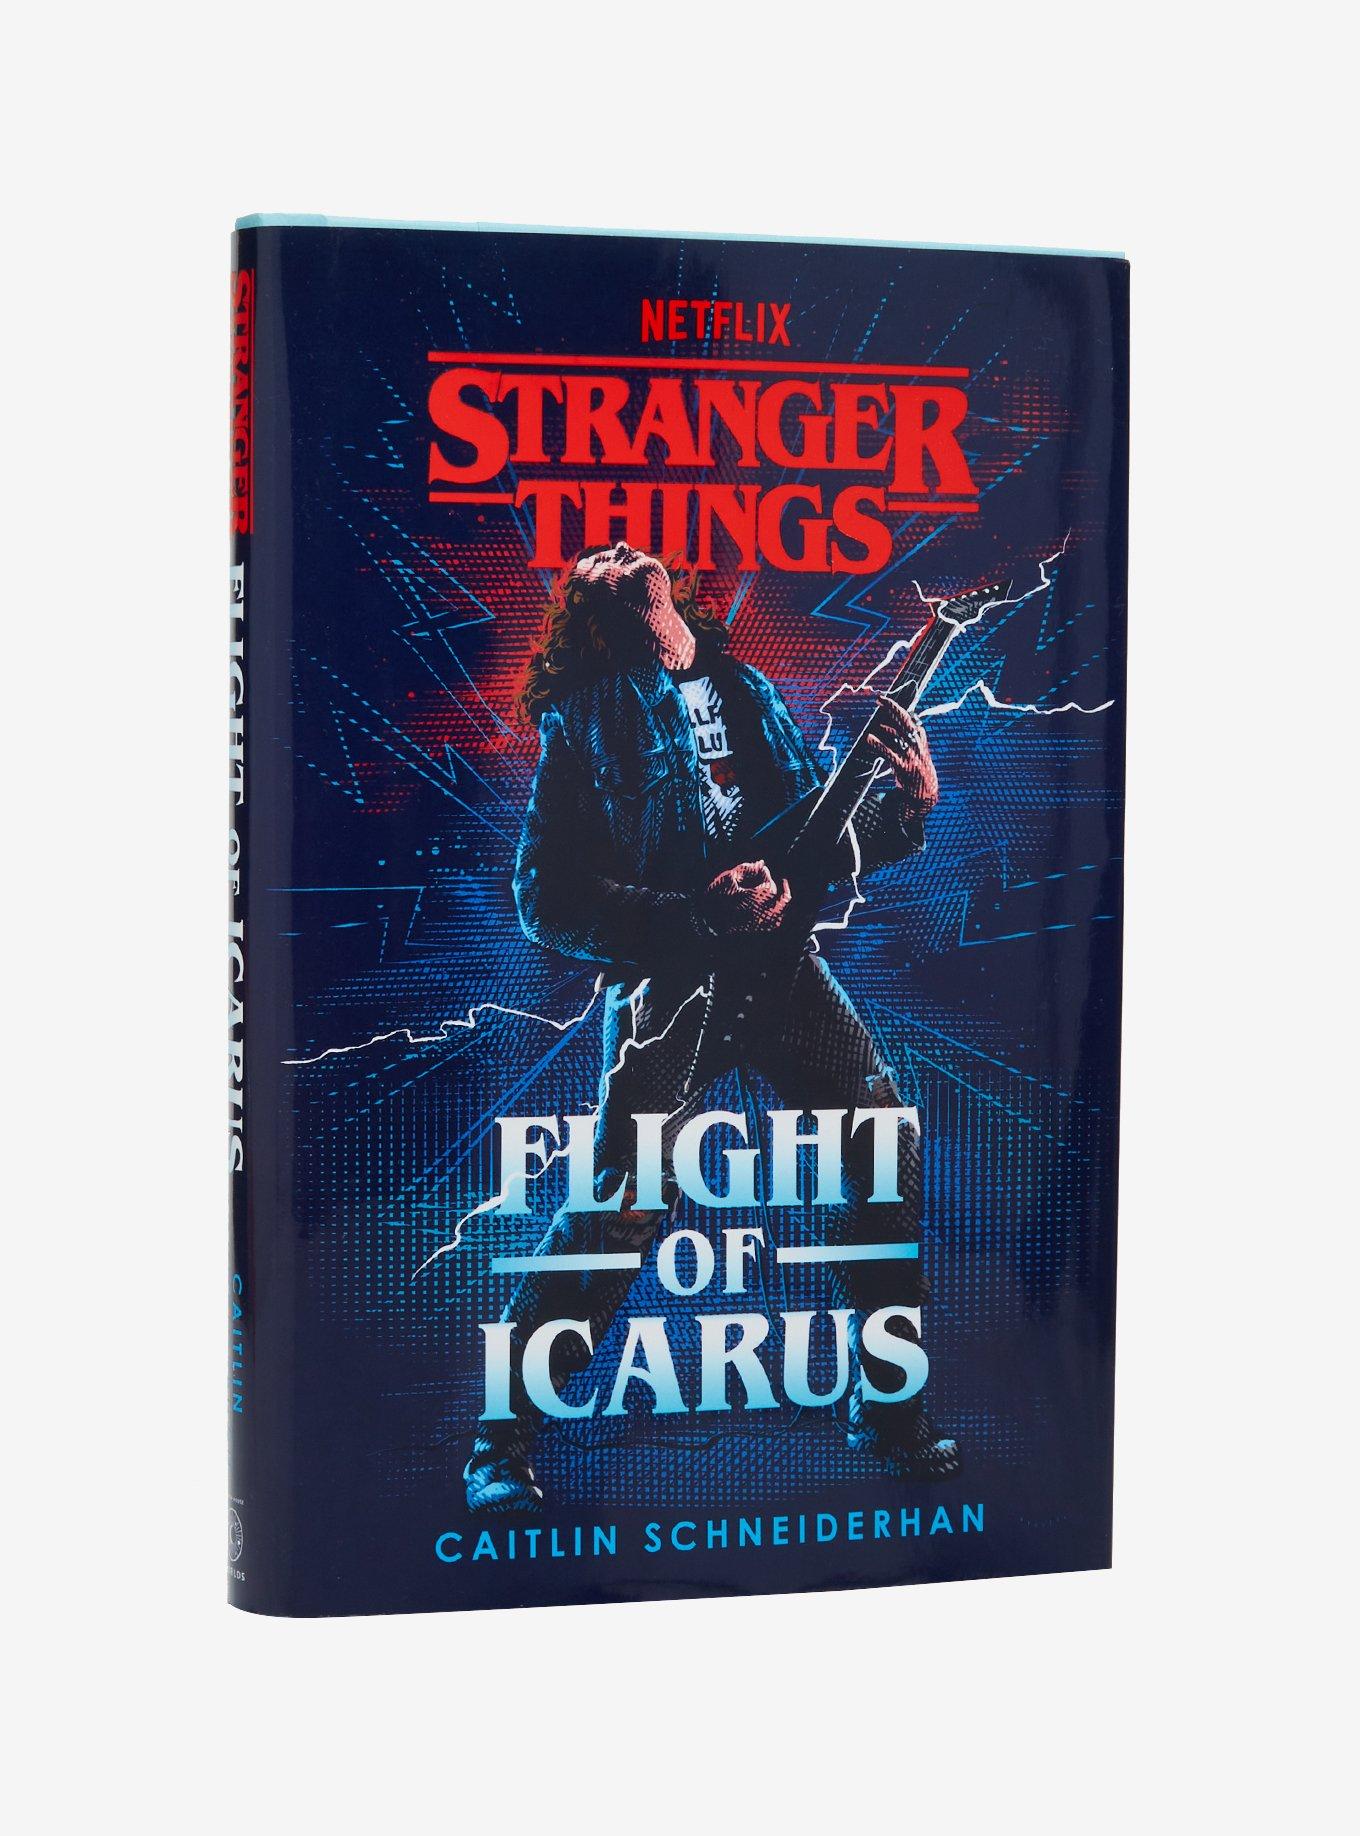 Stranger Things: Flight of Icarus' reveals Eddie Munson mom details